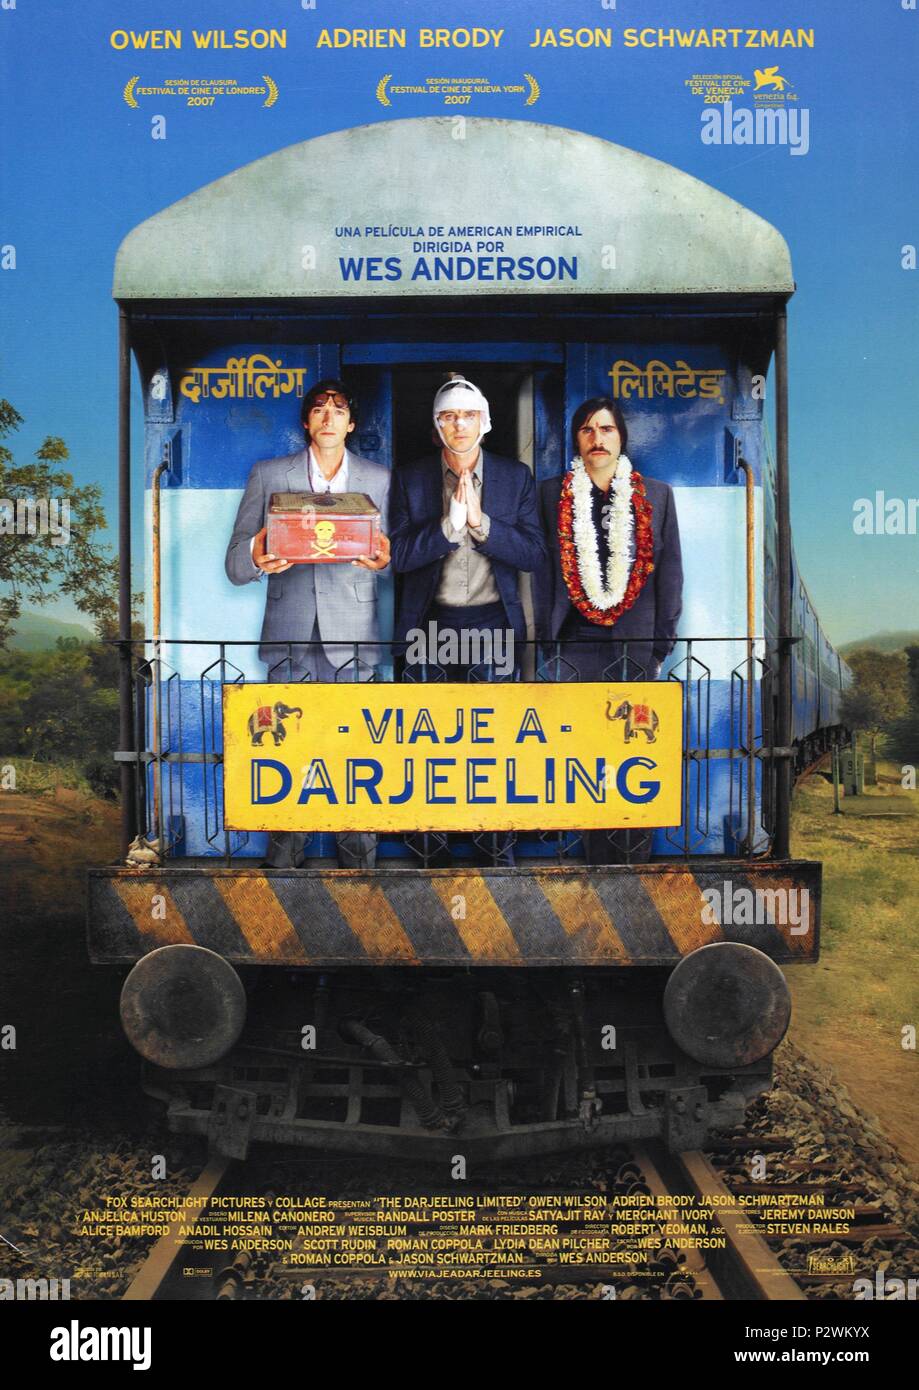 051 The Darjeeling Limited — The Film Look.